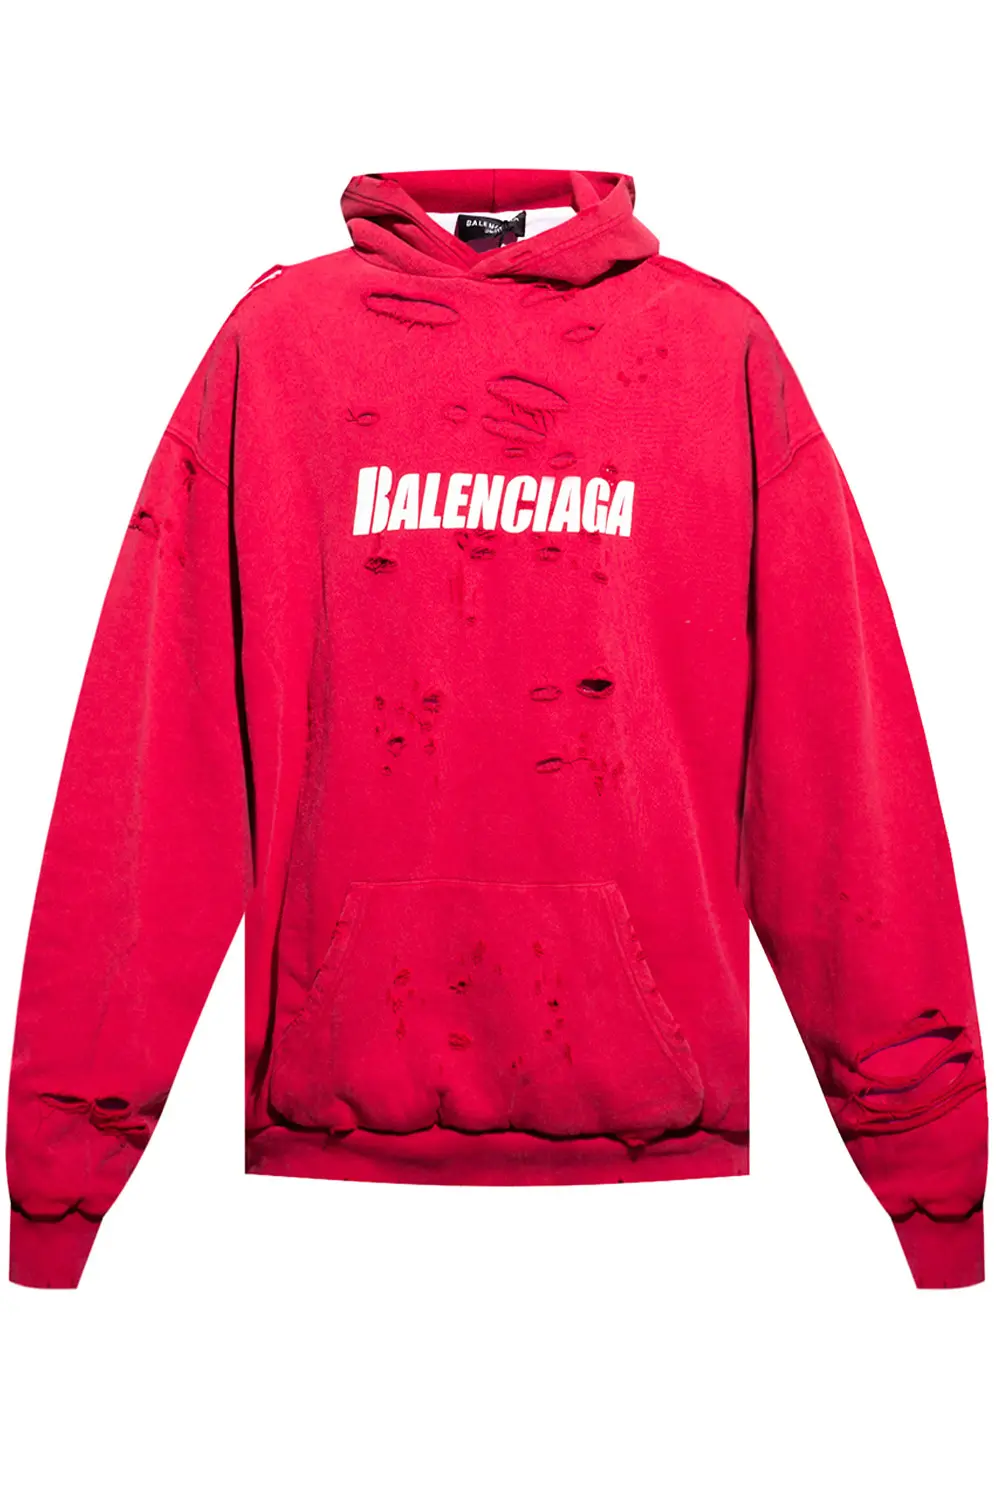 BALENCIAGA Sweatshirt With Holes バレンシアガ パーカー フーディ ...